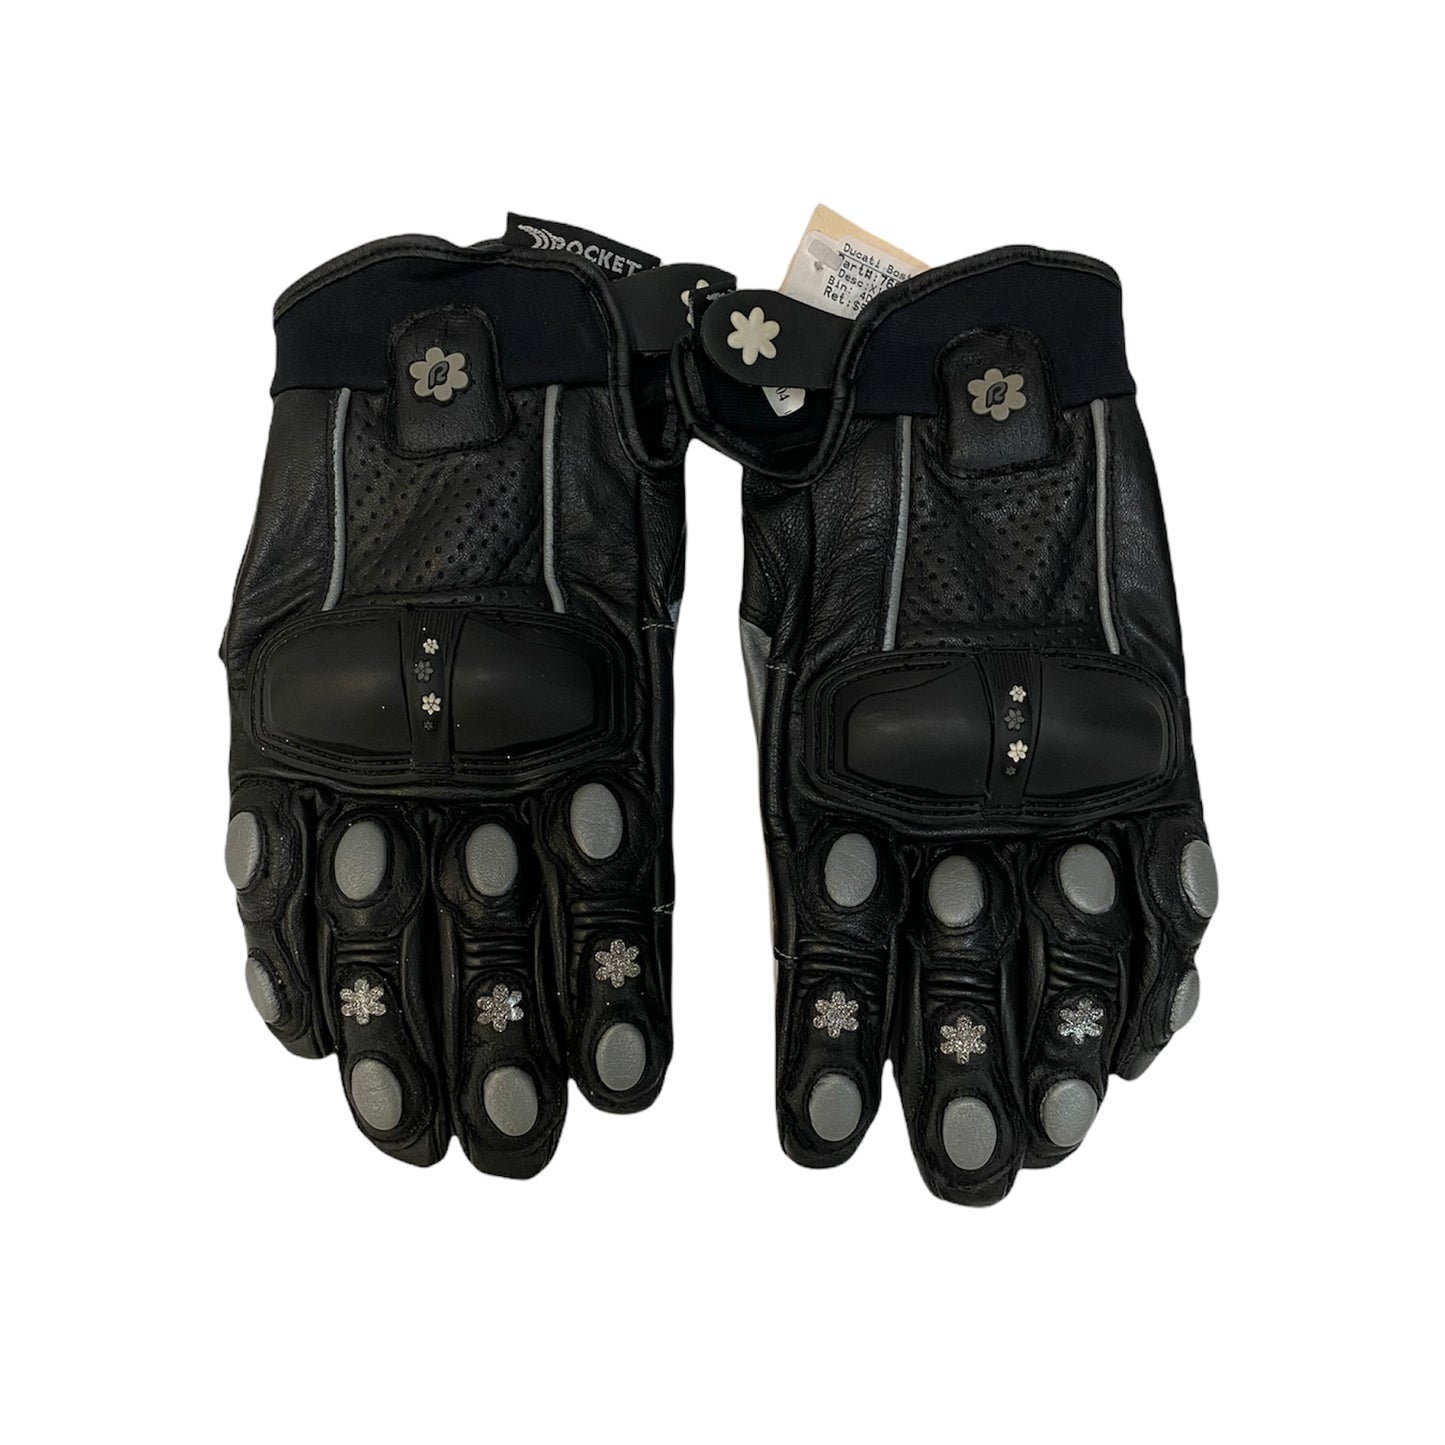 Joe Rocket Women's Jet Set Gloves, Black/Silver X-Large 766-0005